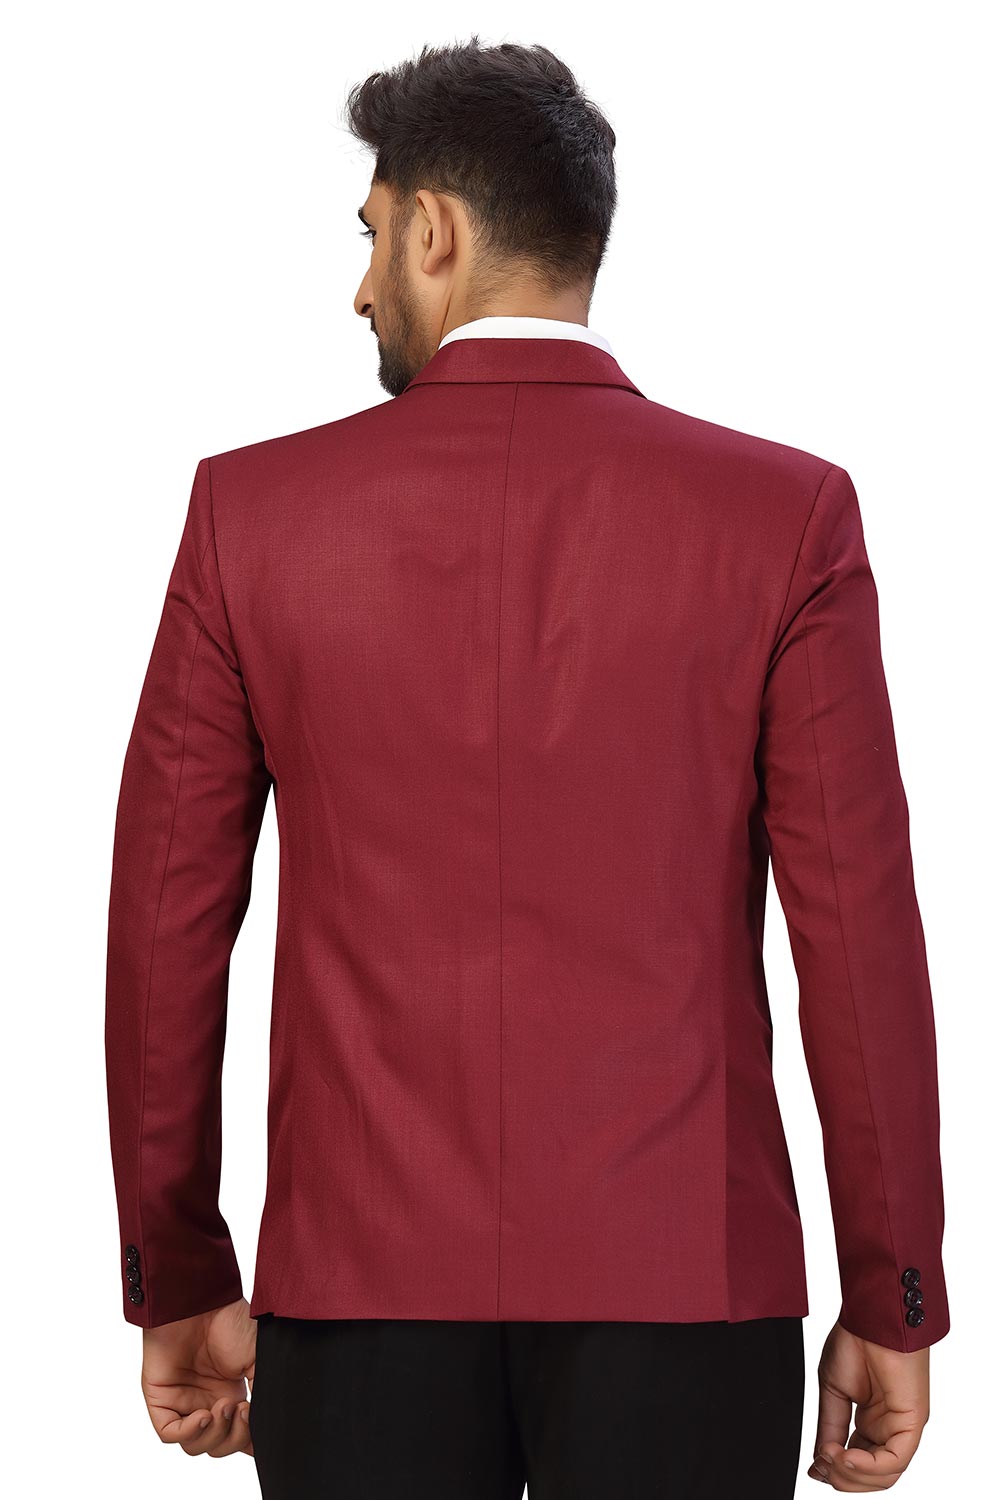 Buy Men's Suiting Fabric  Solid Blazer in Maroon  Online - Back